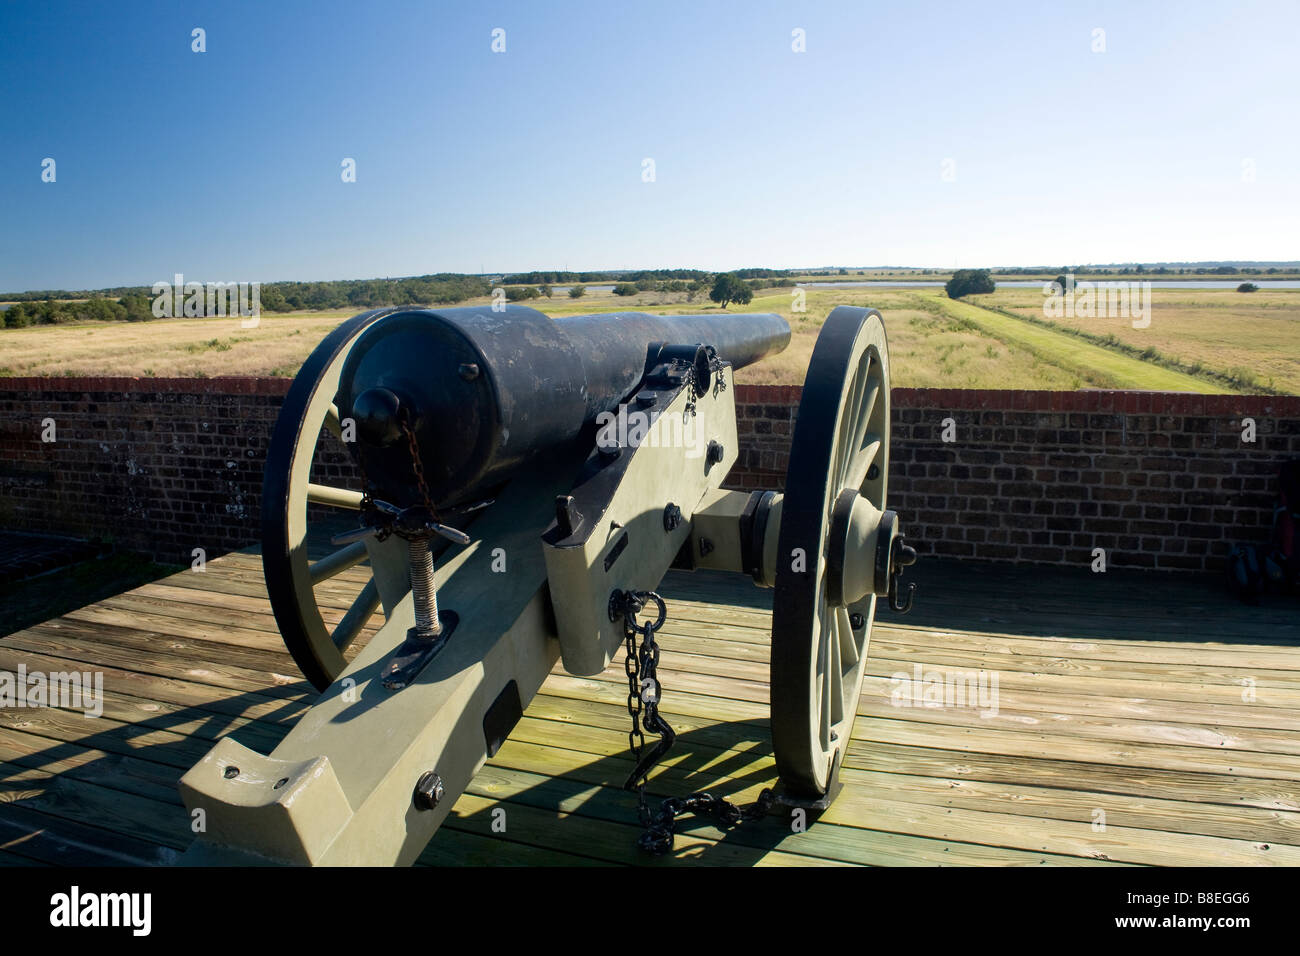 GEORGIA - Canon at Fort Pulaski National Monument, a Civil War era fort built on Cockspur Island to protect Savannah. Stock Photo